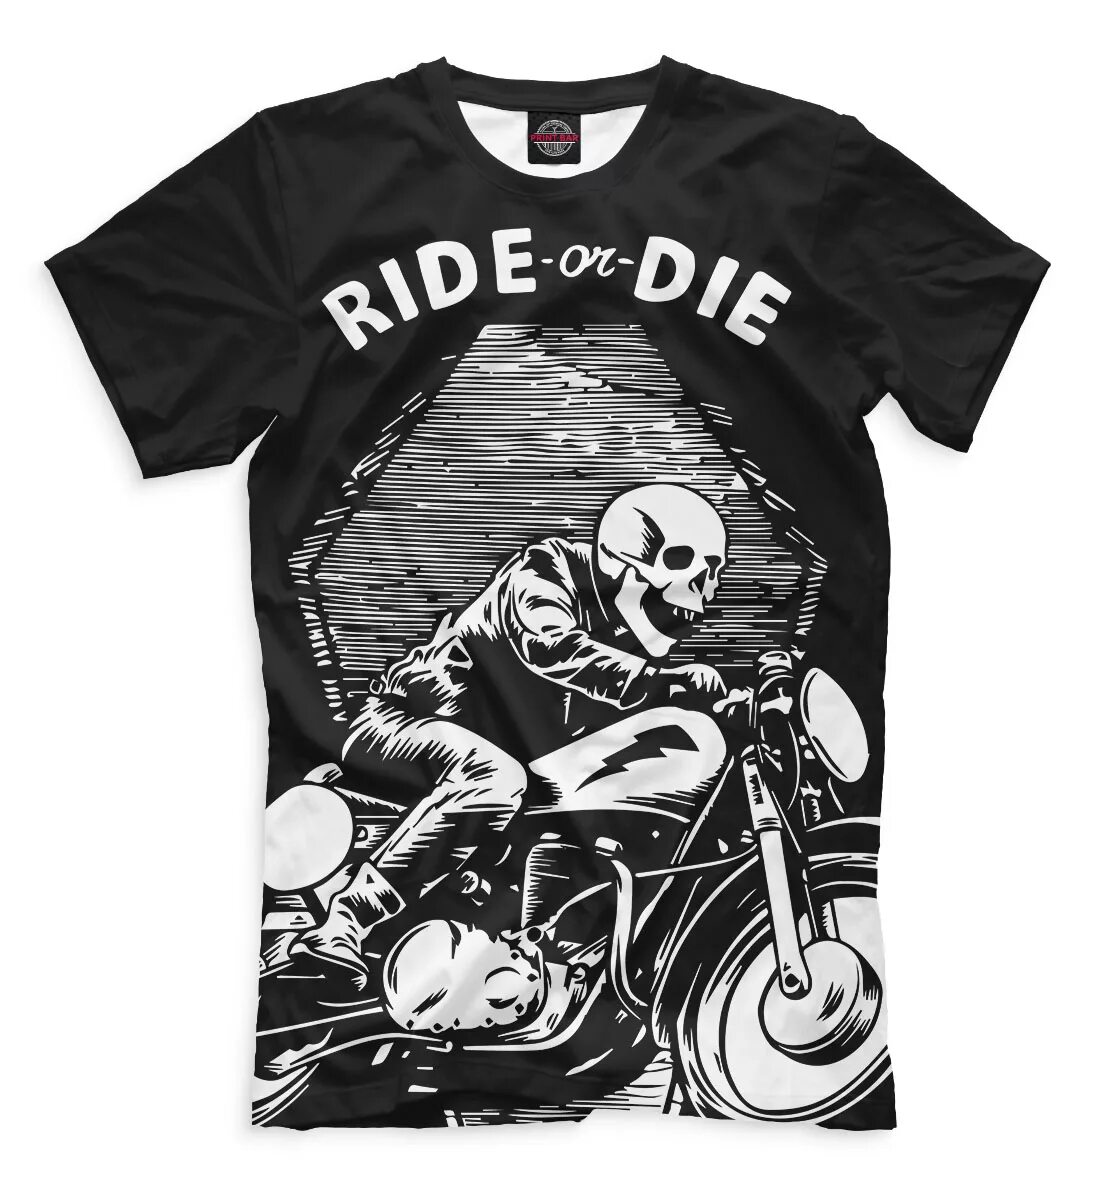 Bad boys ride or die. Футболка Ride. Брутальный принт на футболку. Ride or die. Футболка die.